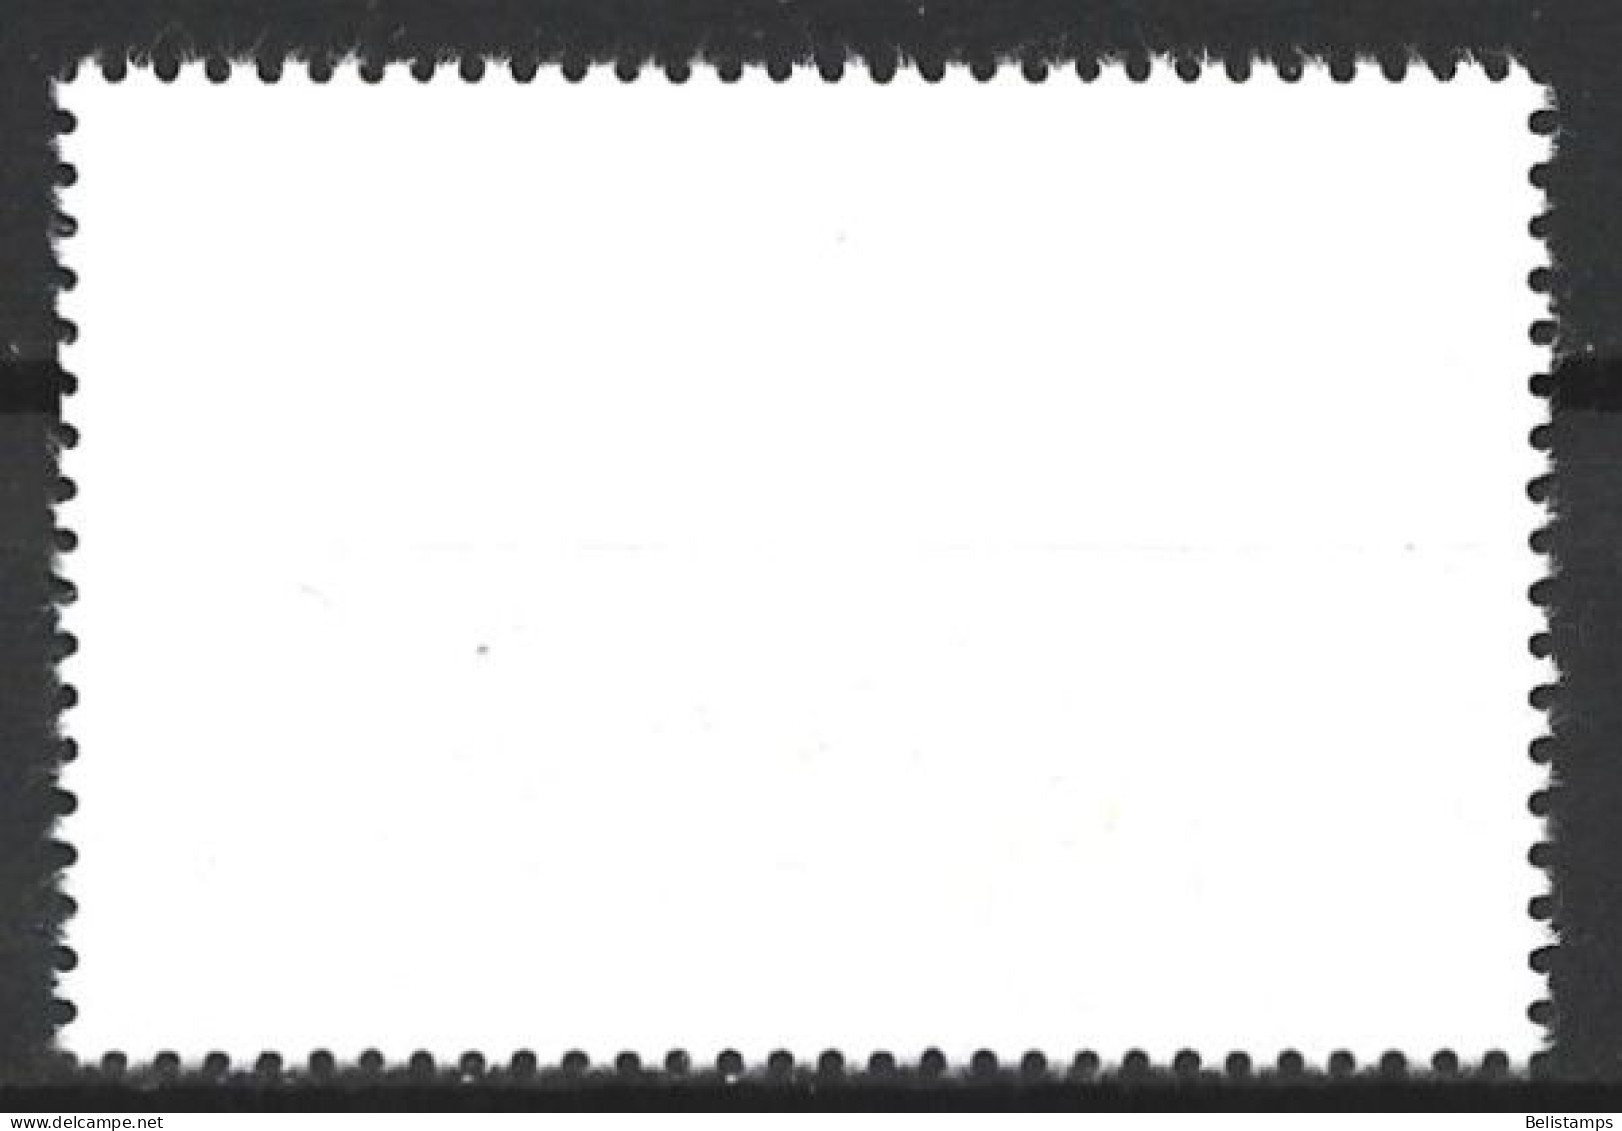 Cuba 1977. Scott #2163 (U) Intl. Airmail Service, 50th Anniv. - Gebraucht